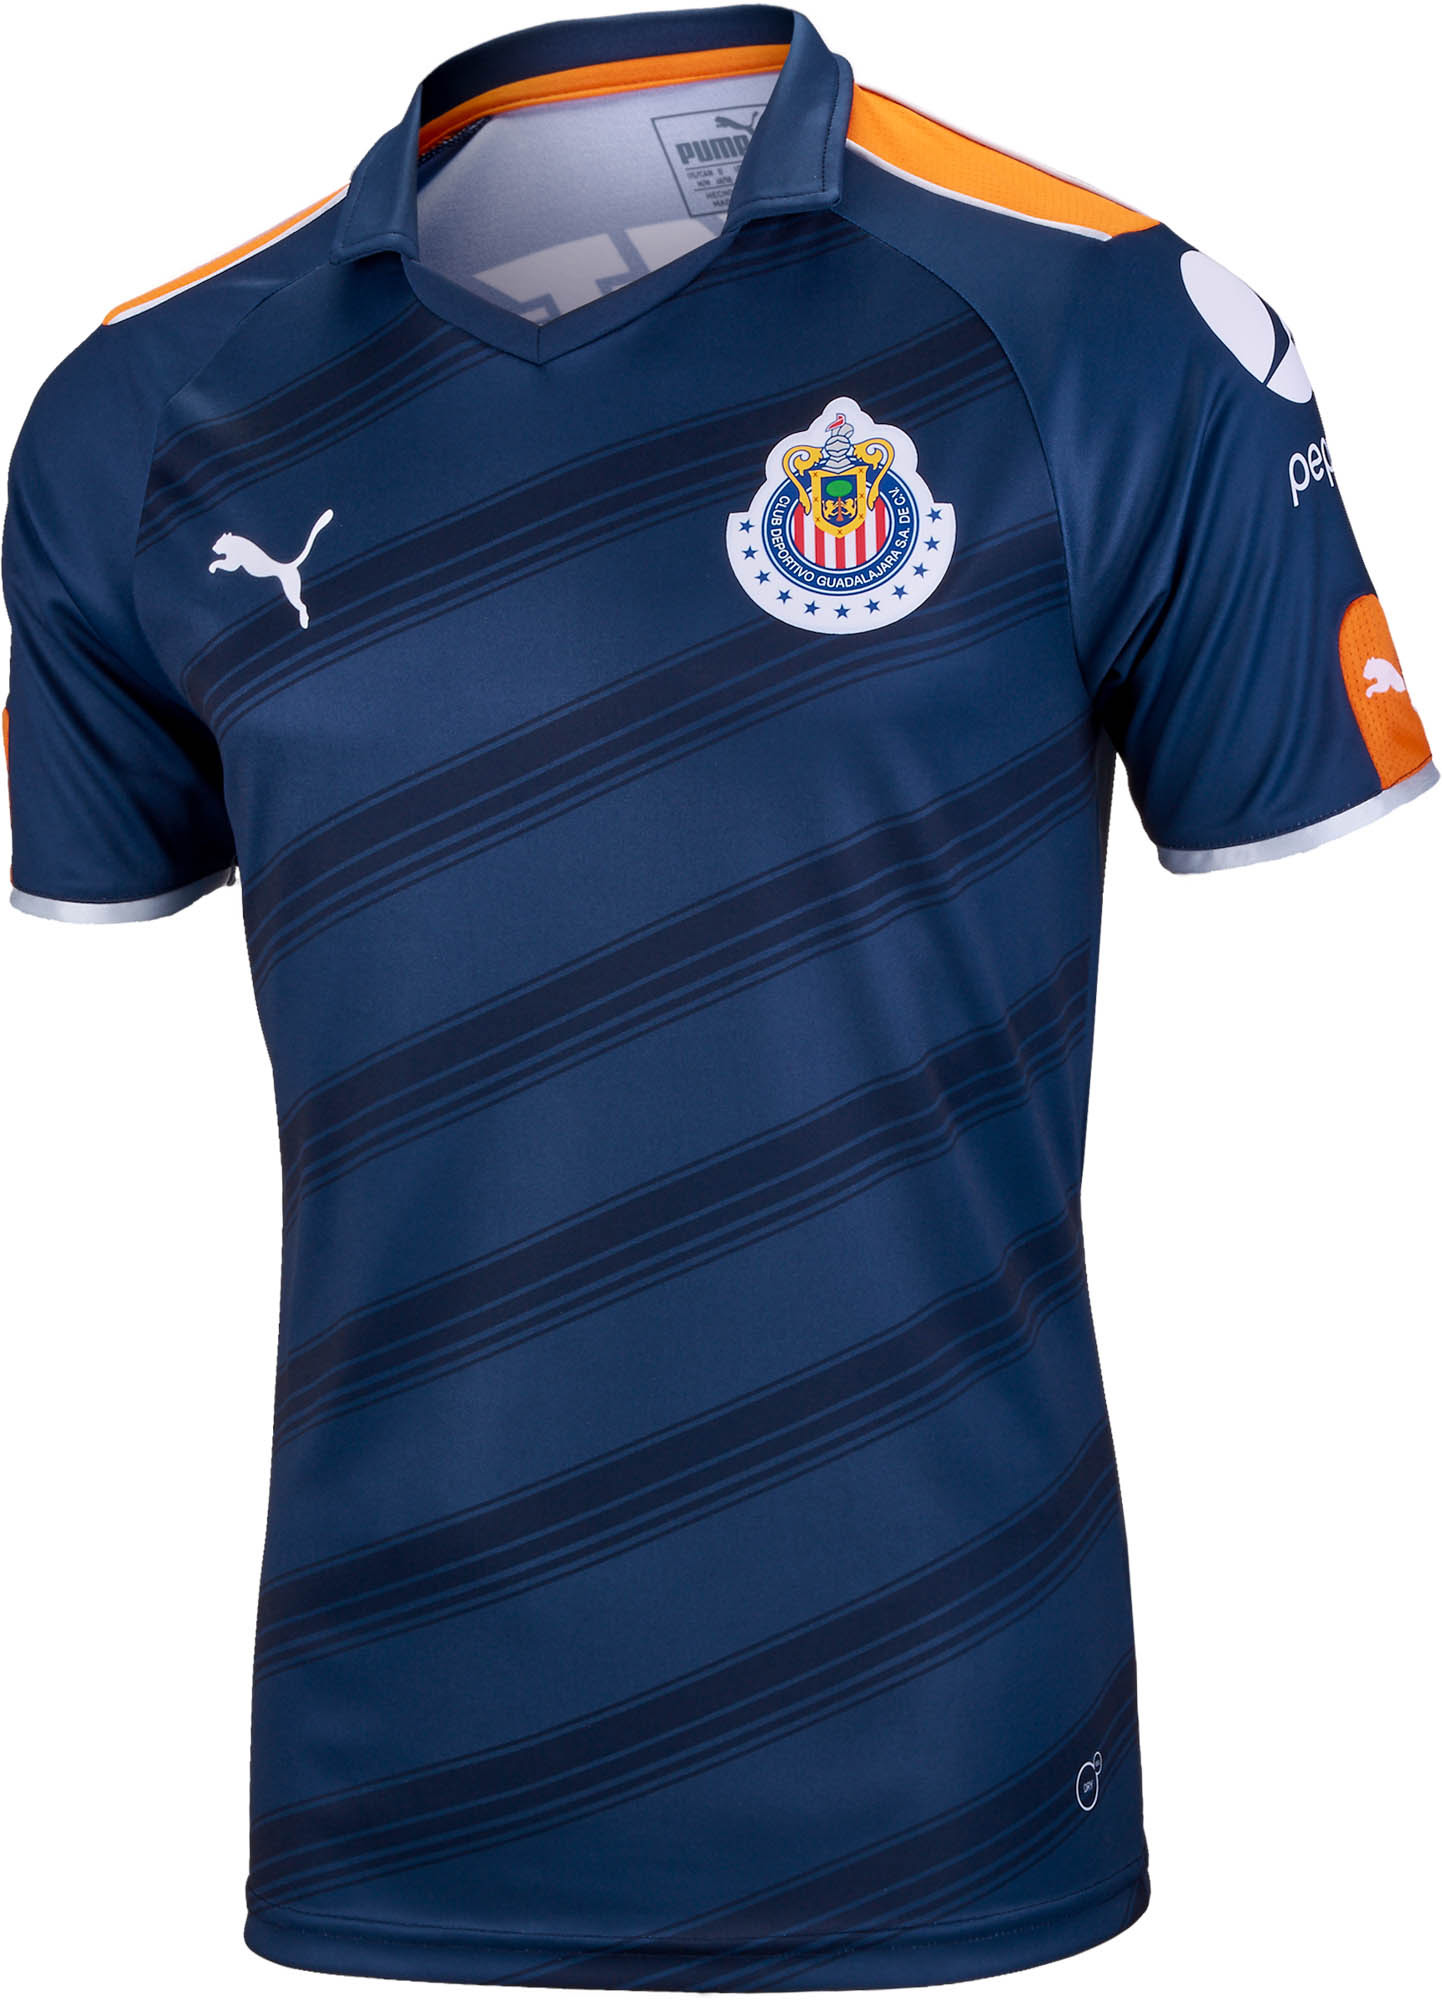 chivas jersey 2016